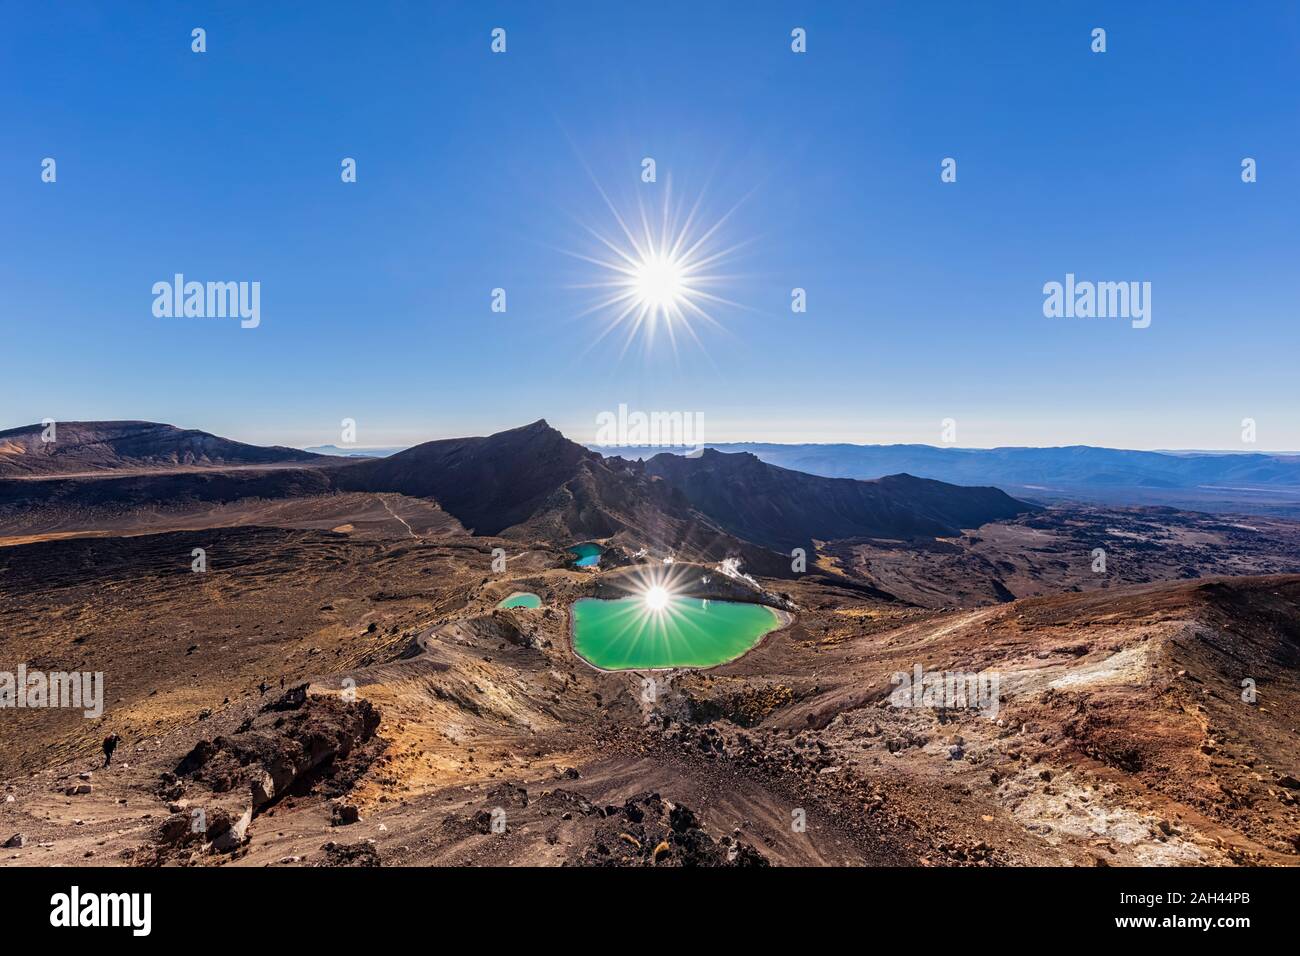 New Zealand, North Island, Sun shining over Emerald Lakes in North Island Volcanic Plateau Stock Photo